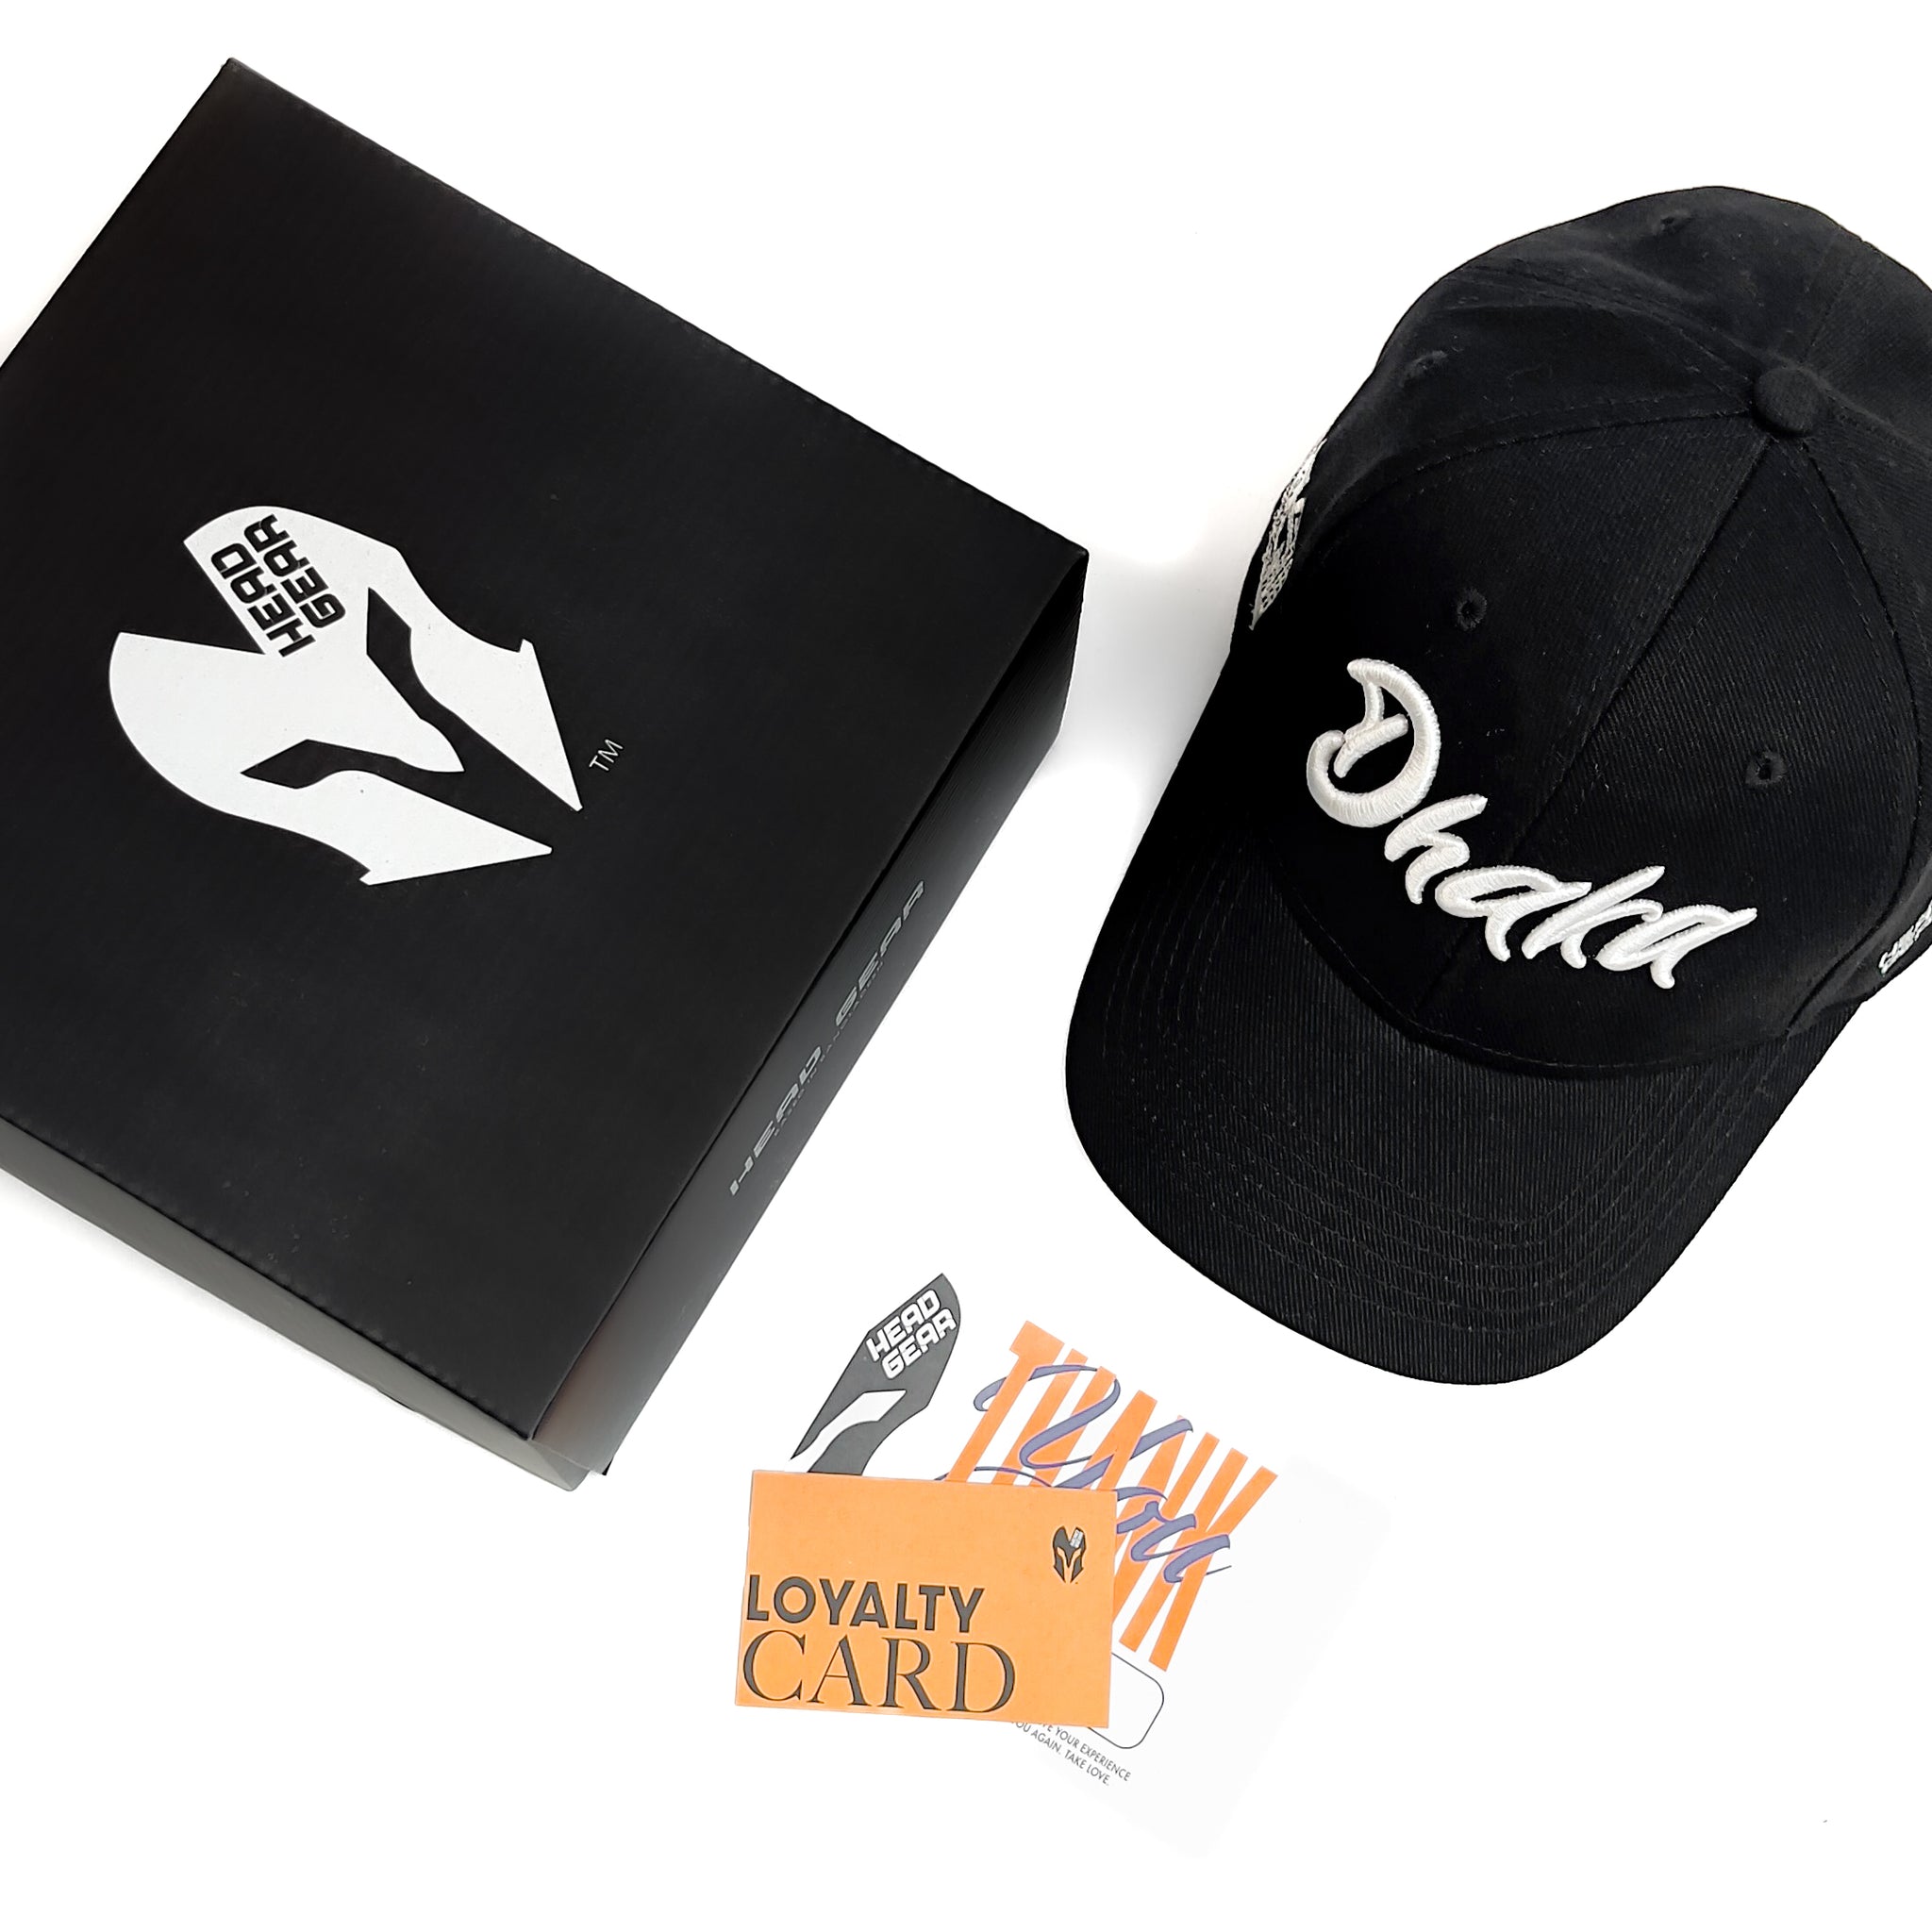 DHAKA BLACK NEW EDITION HEAD GEAR CAP